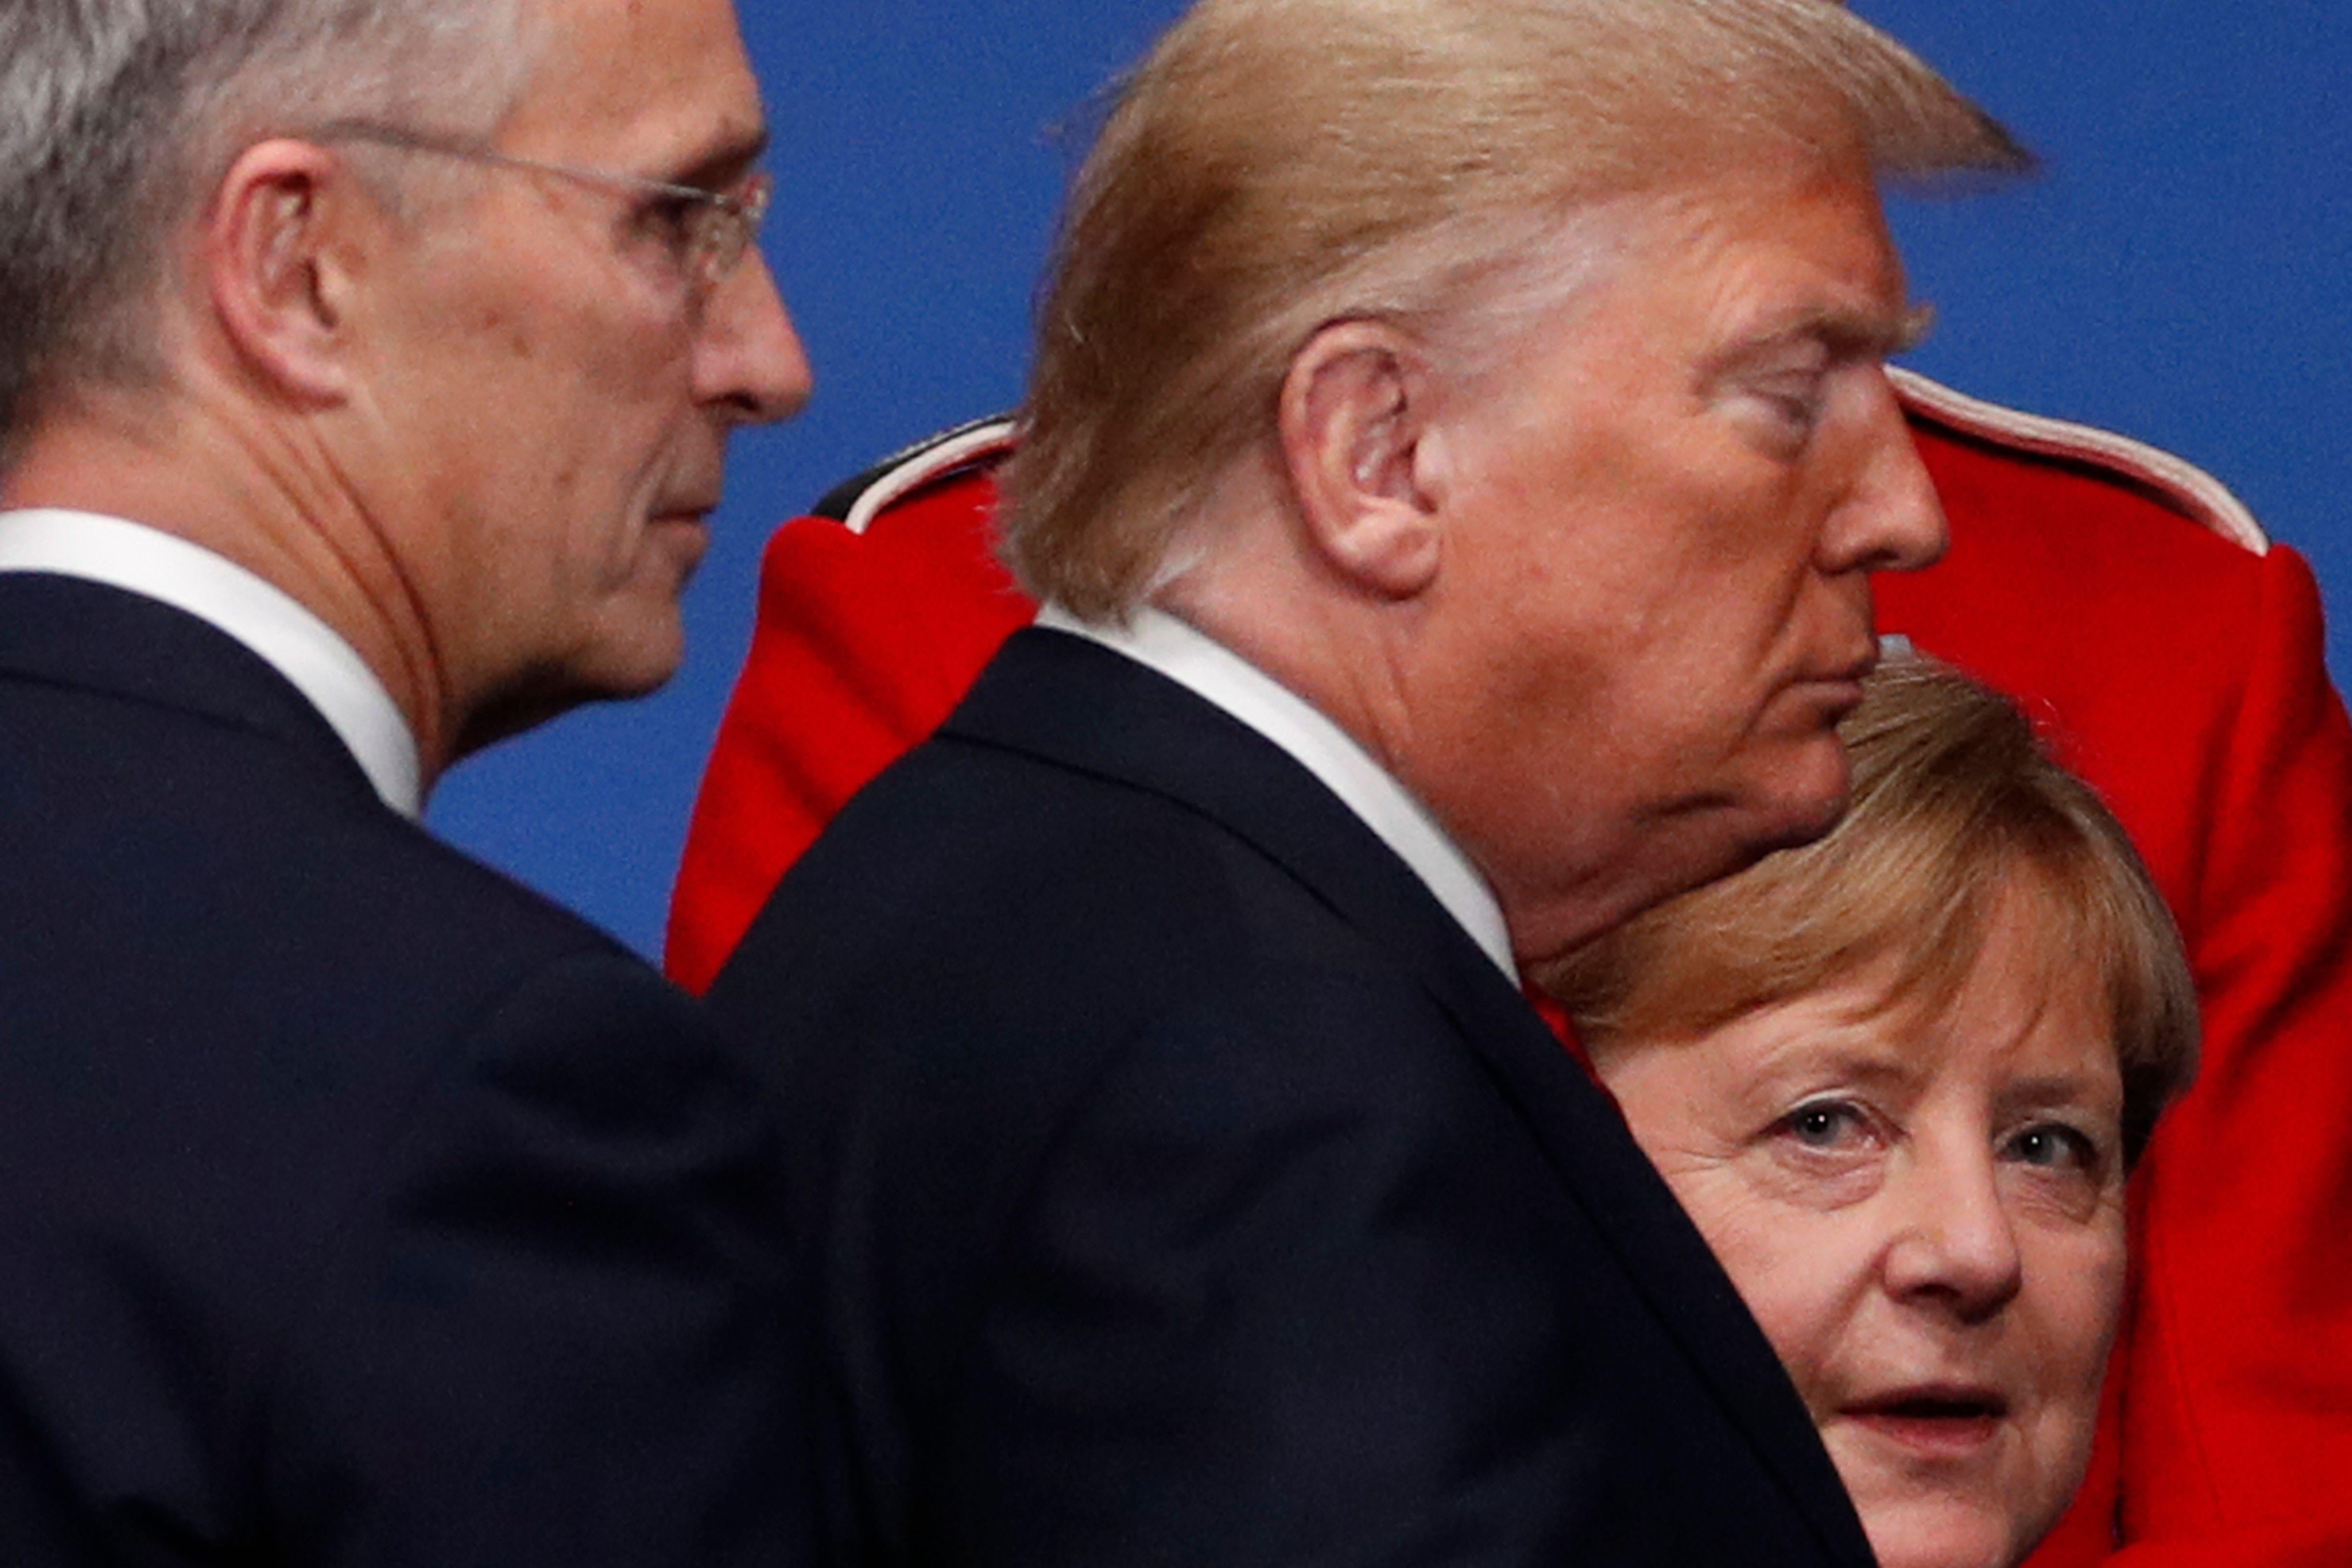 Merkel looks toward the camera as Trump and Stoltenberg walk past her.